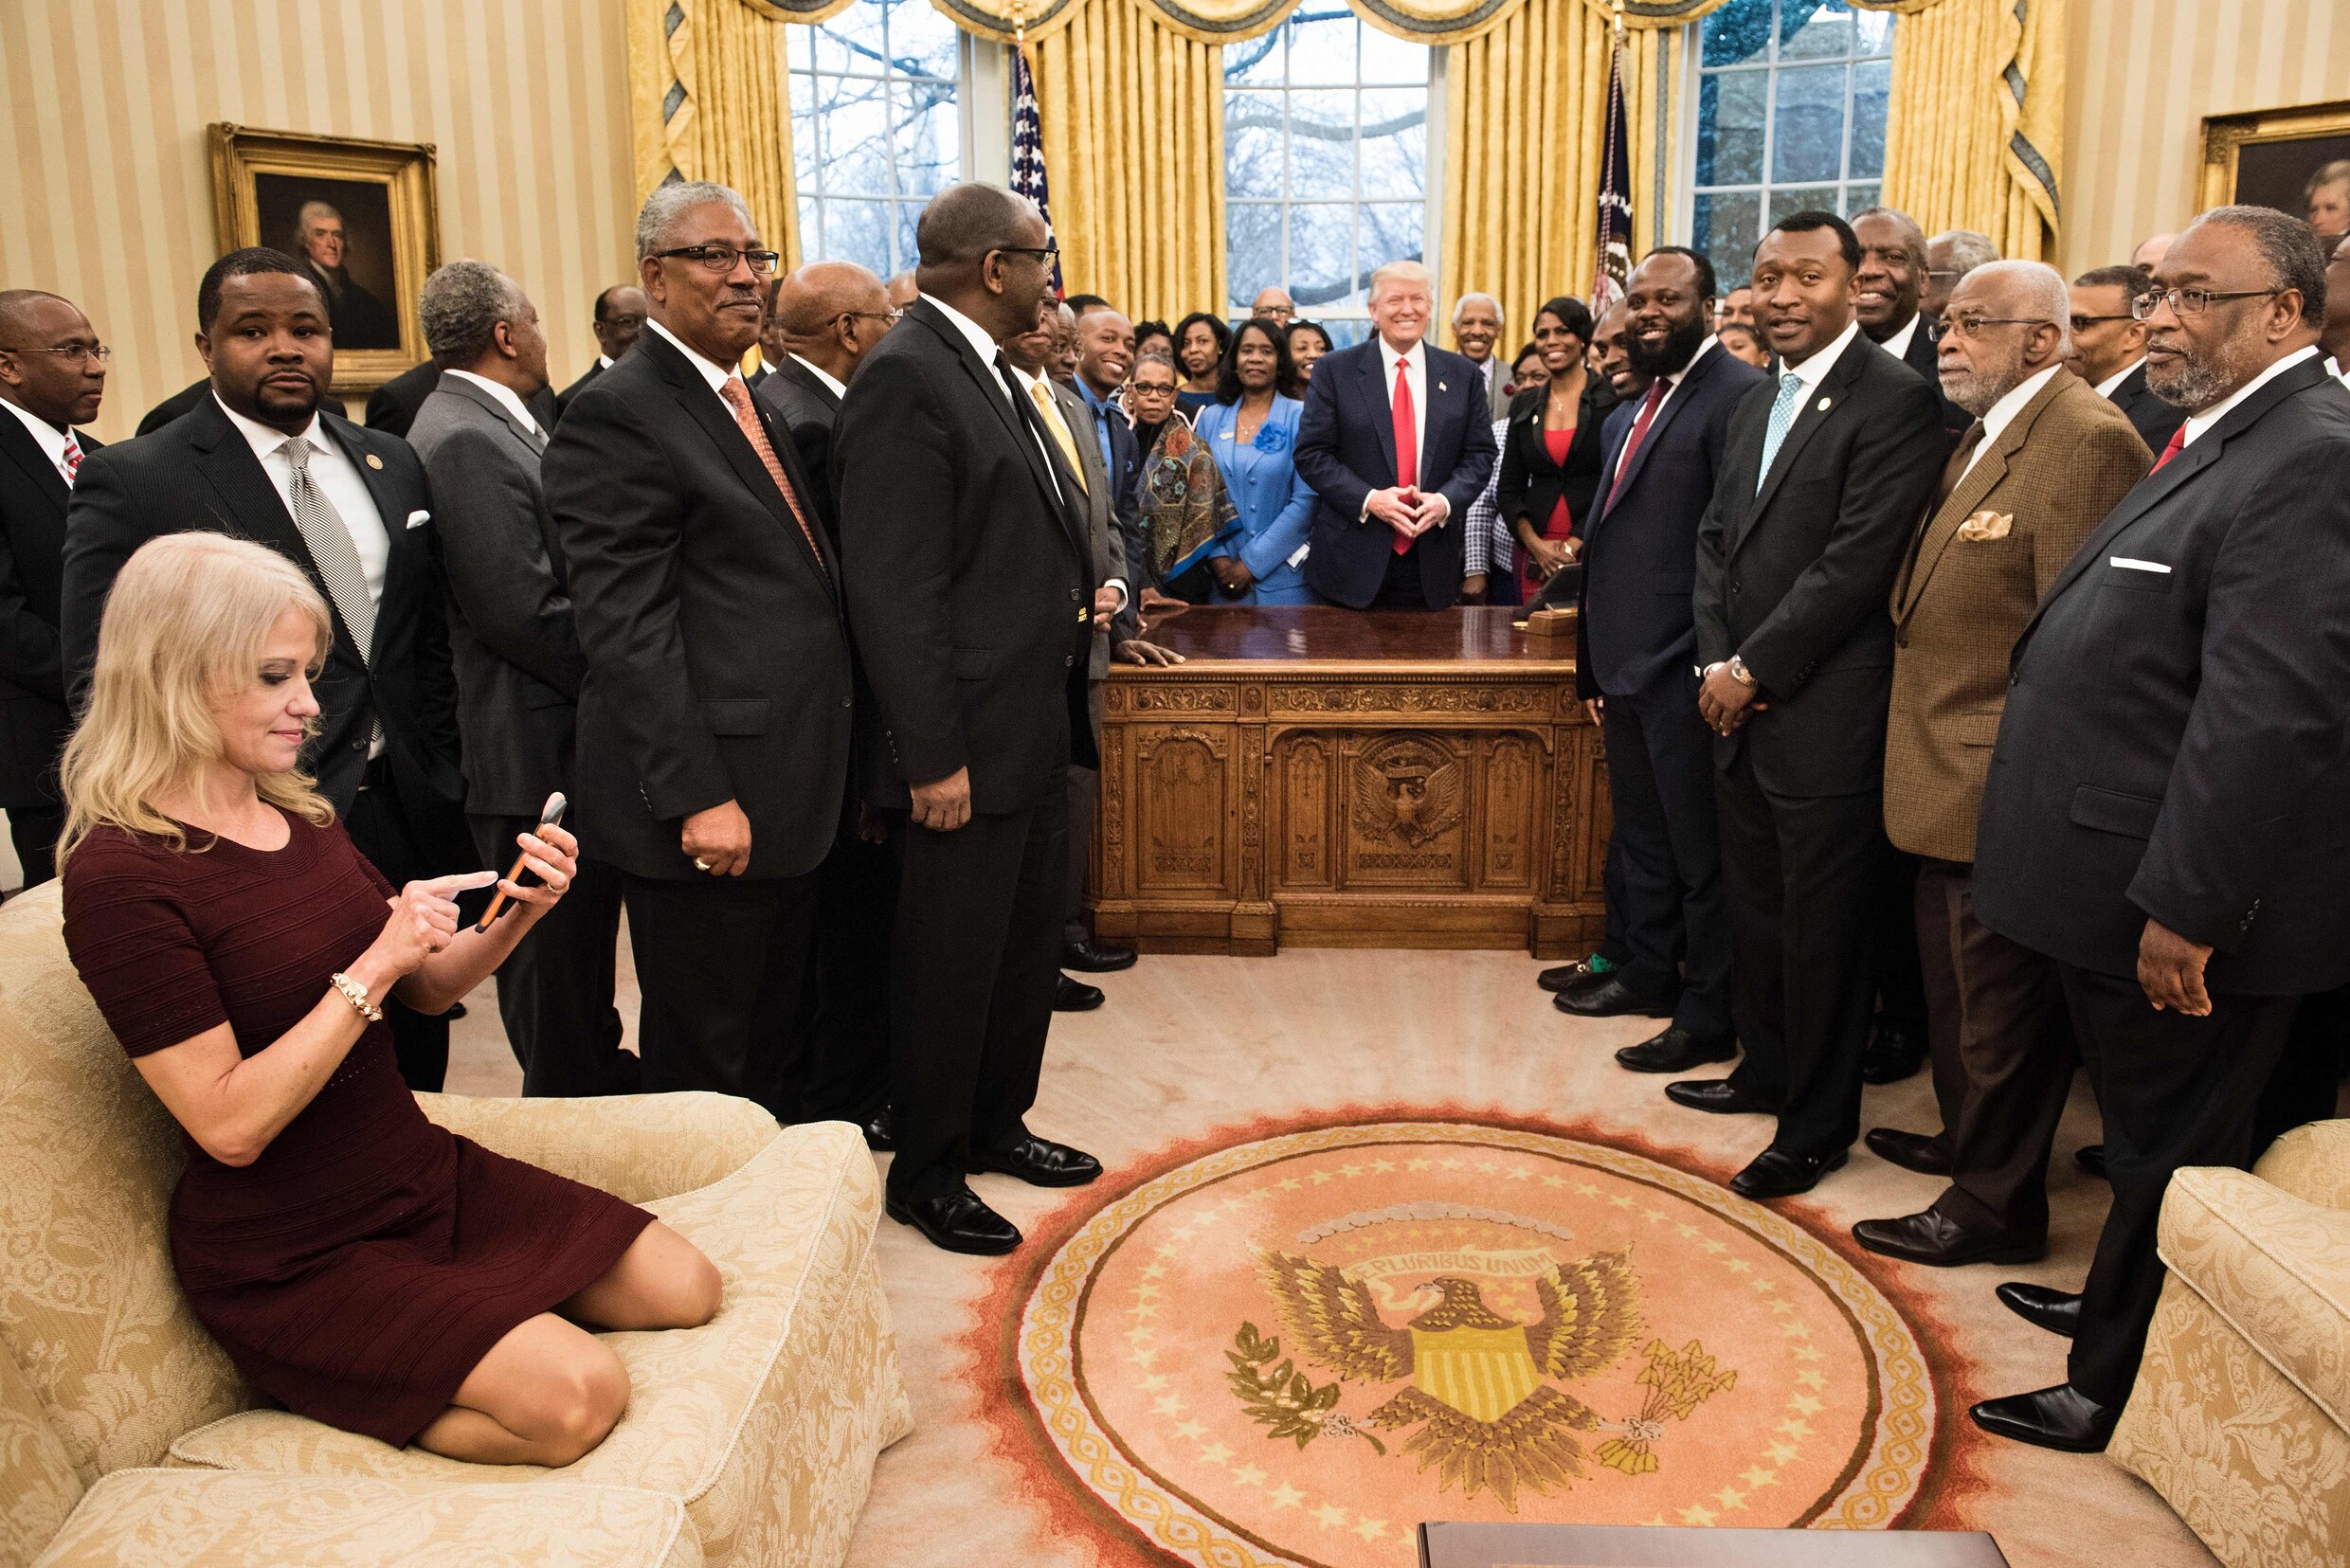 Foto van Trumps adviseur Conway op sofa in Witte Huis doet stof opwaaien